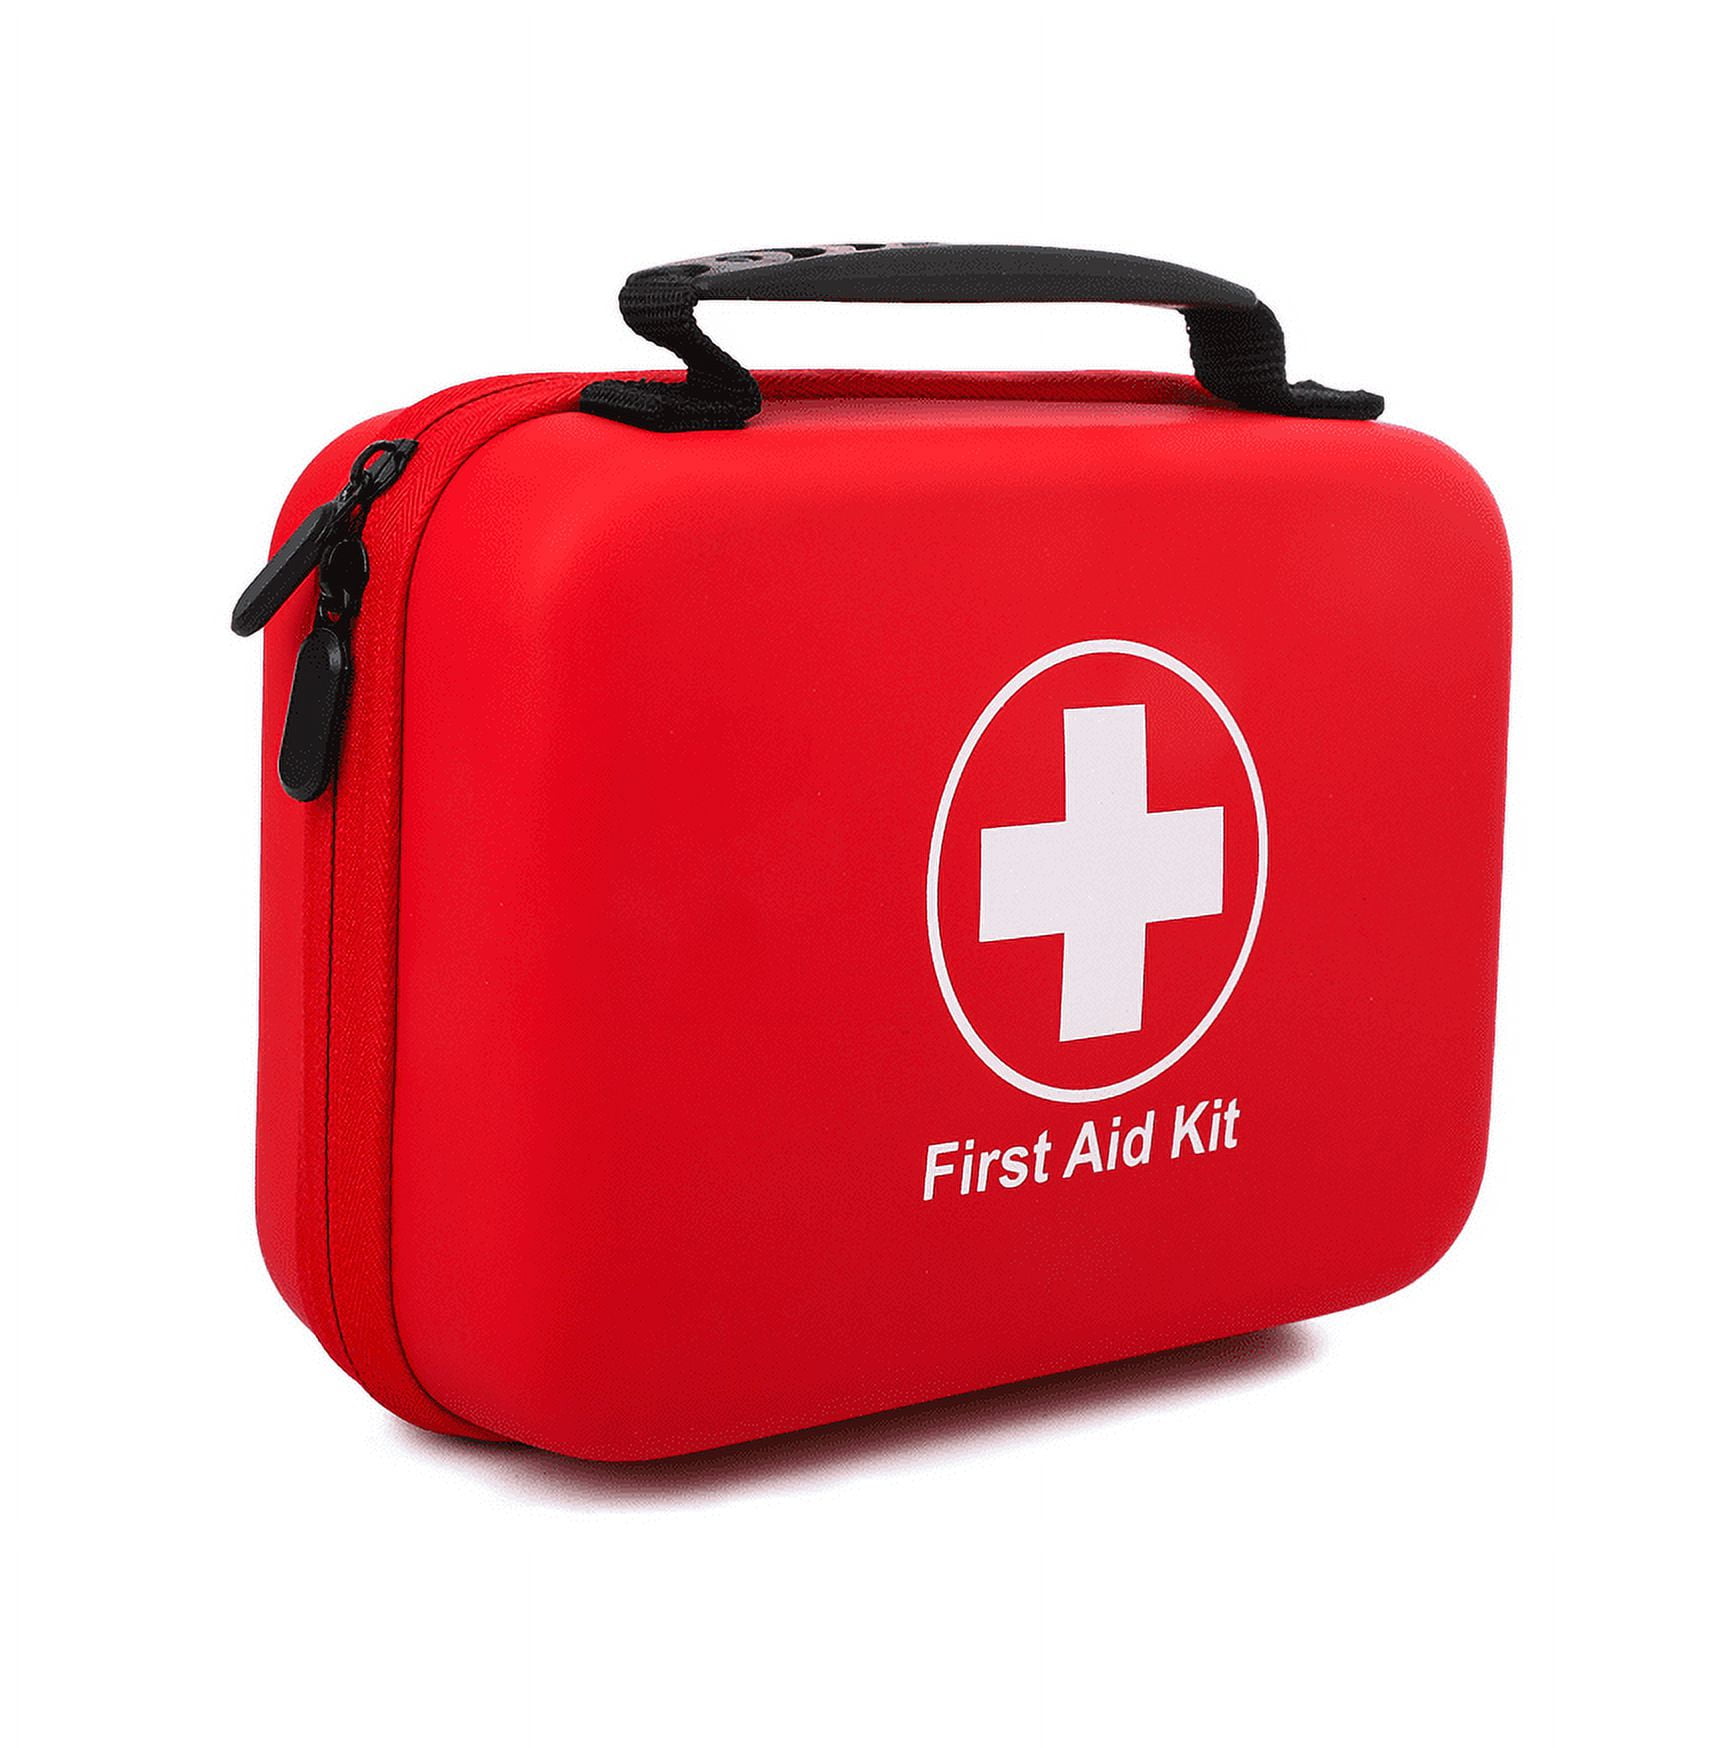 10-Piece Emergency Survival Kit